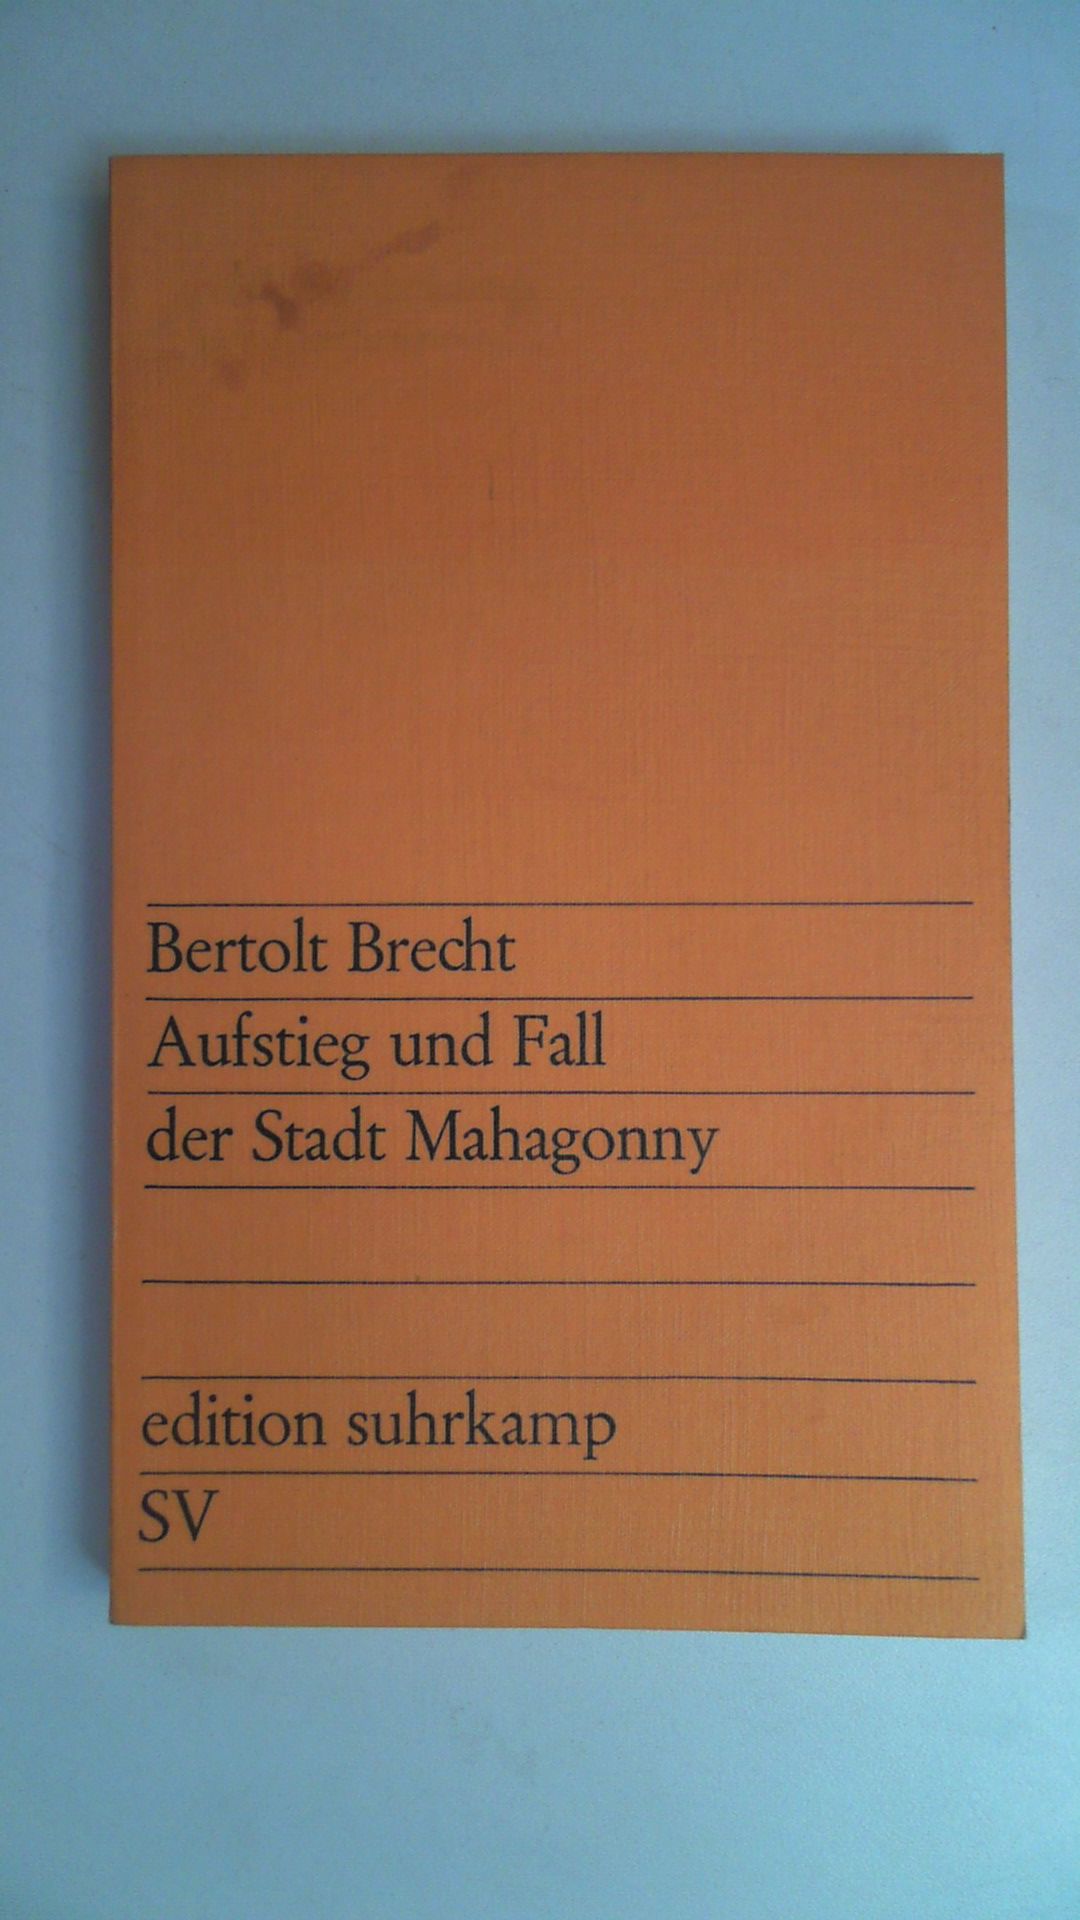 Aufstieg und Fall der Stadt Mahagonny (Edition Suhrkamp 21), - Brecht, Bertolt